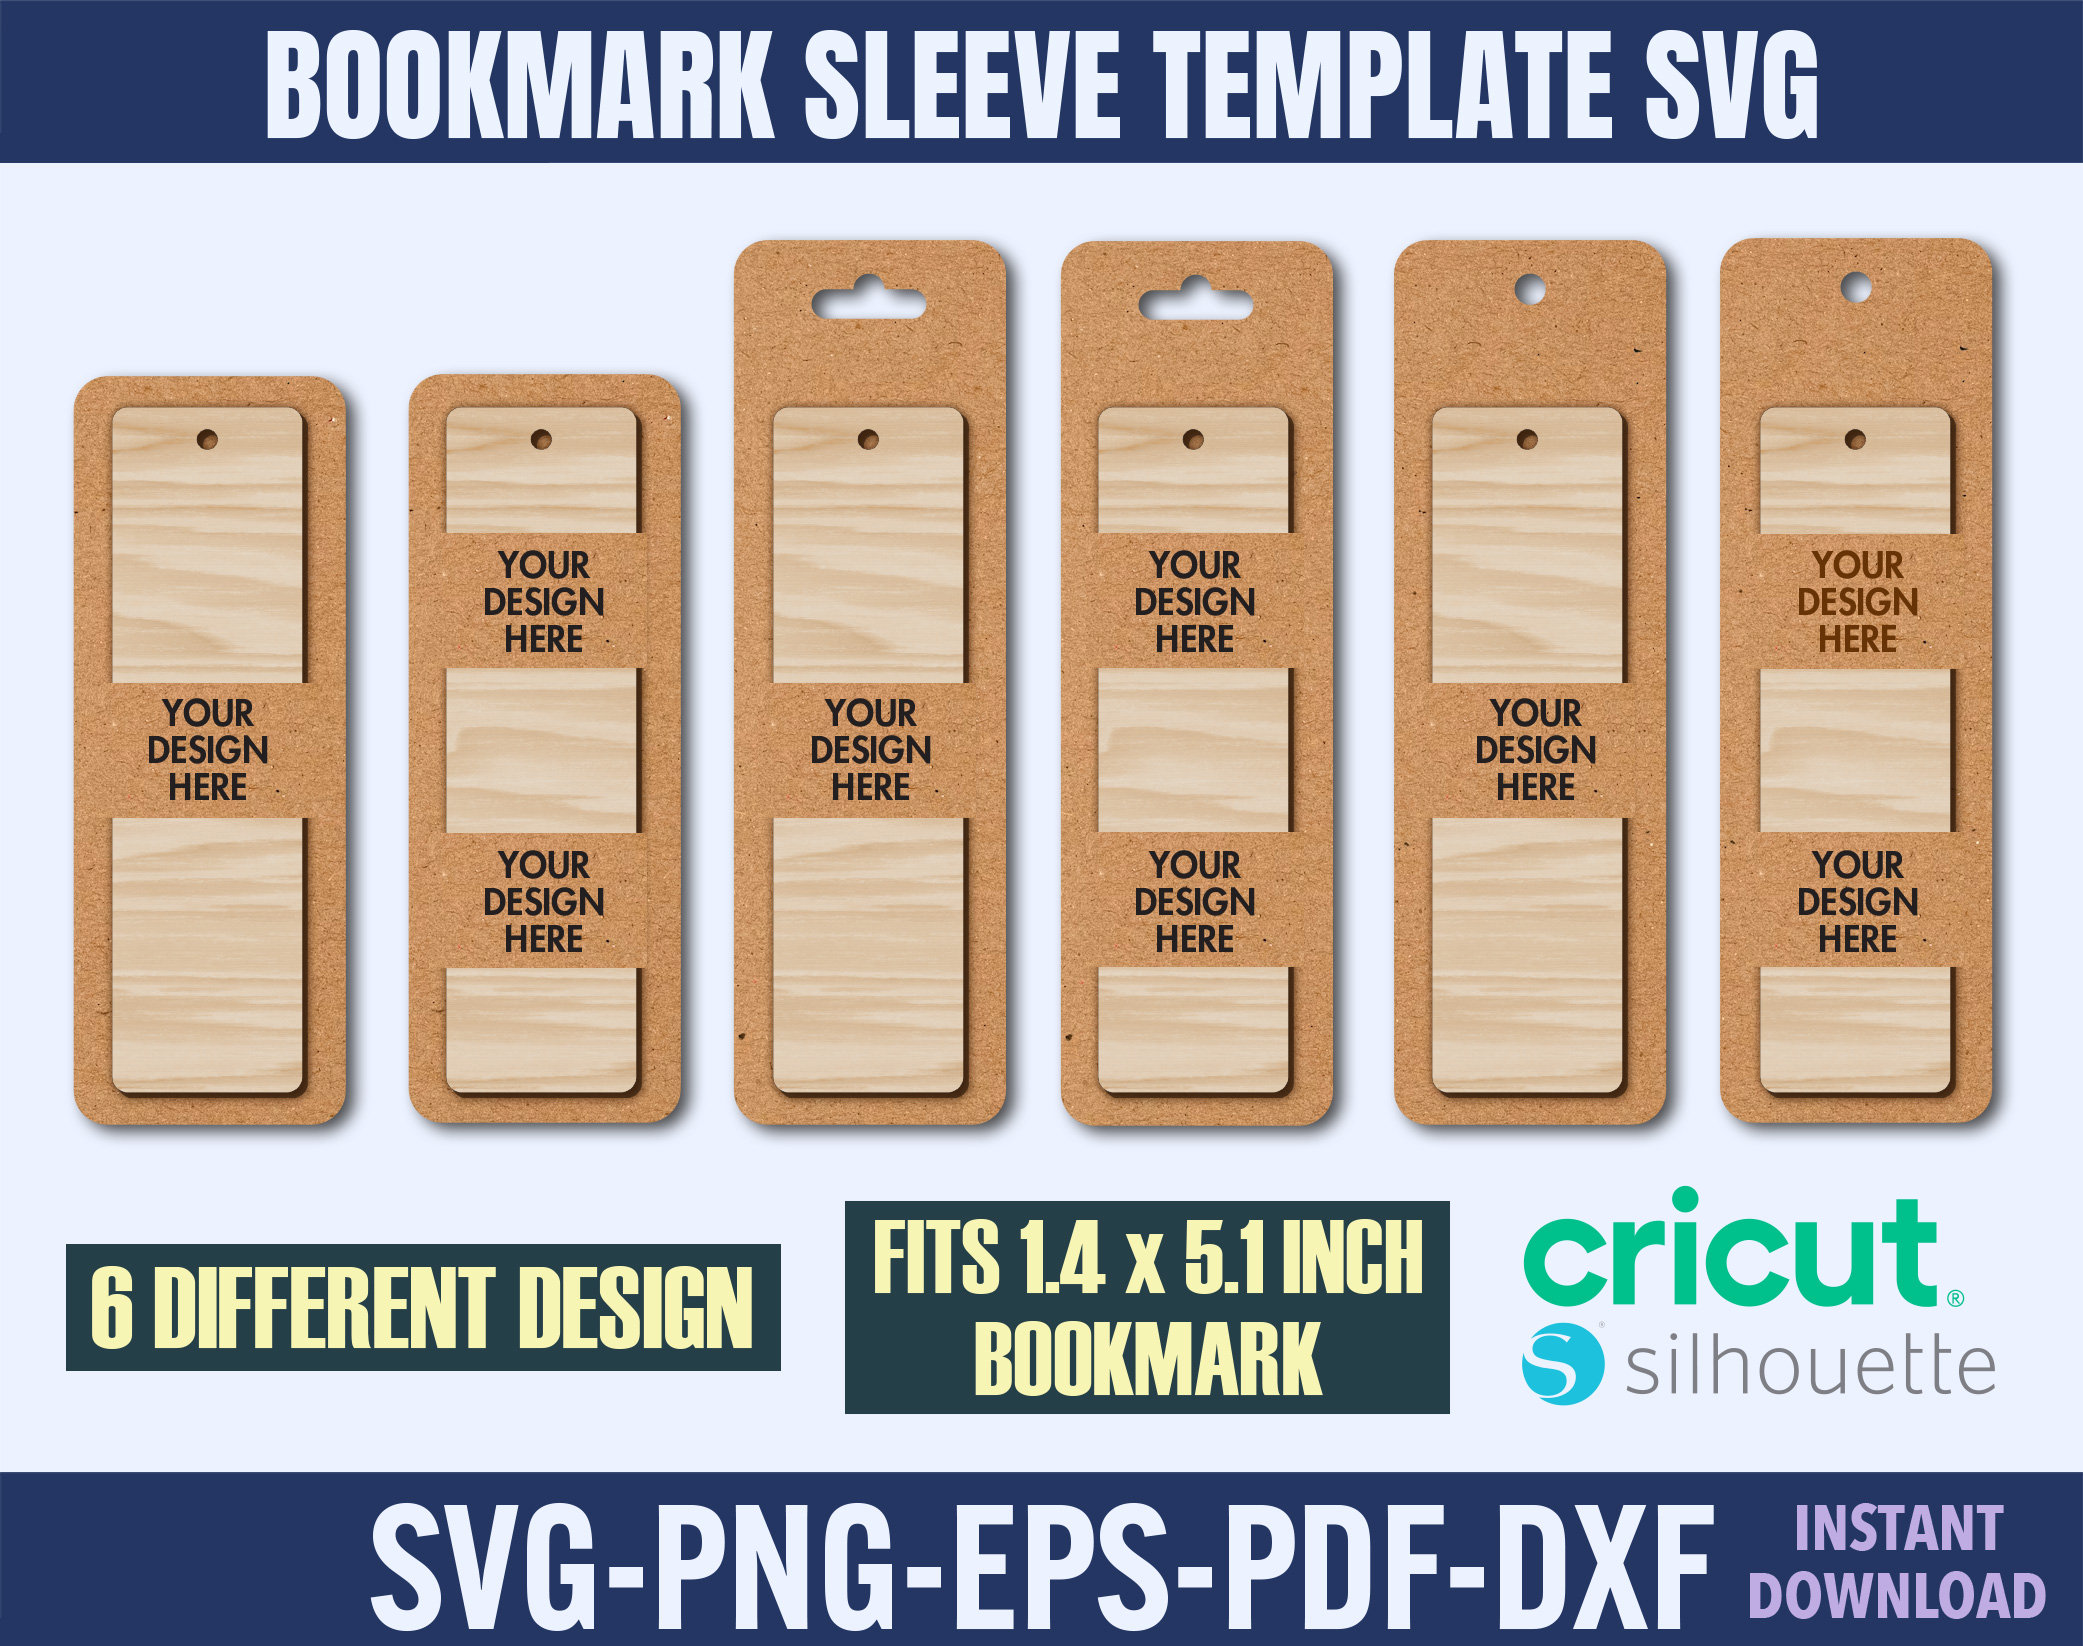 Bookmark Sleeve Svg, Resin Bookmark Packaging, Cut Files, Png Cut